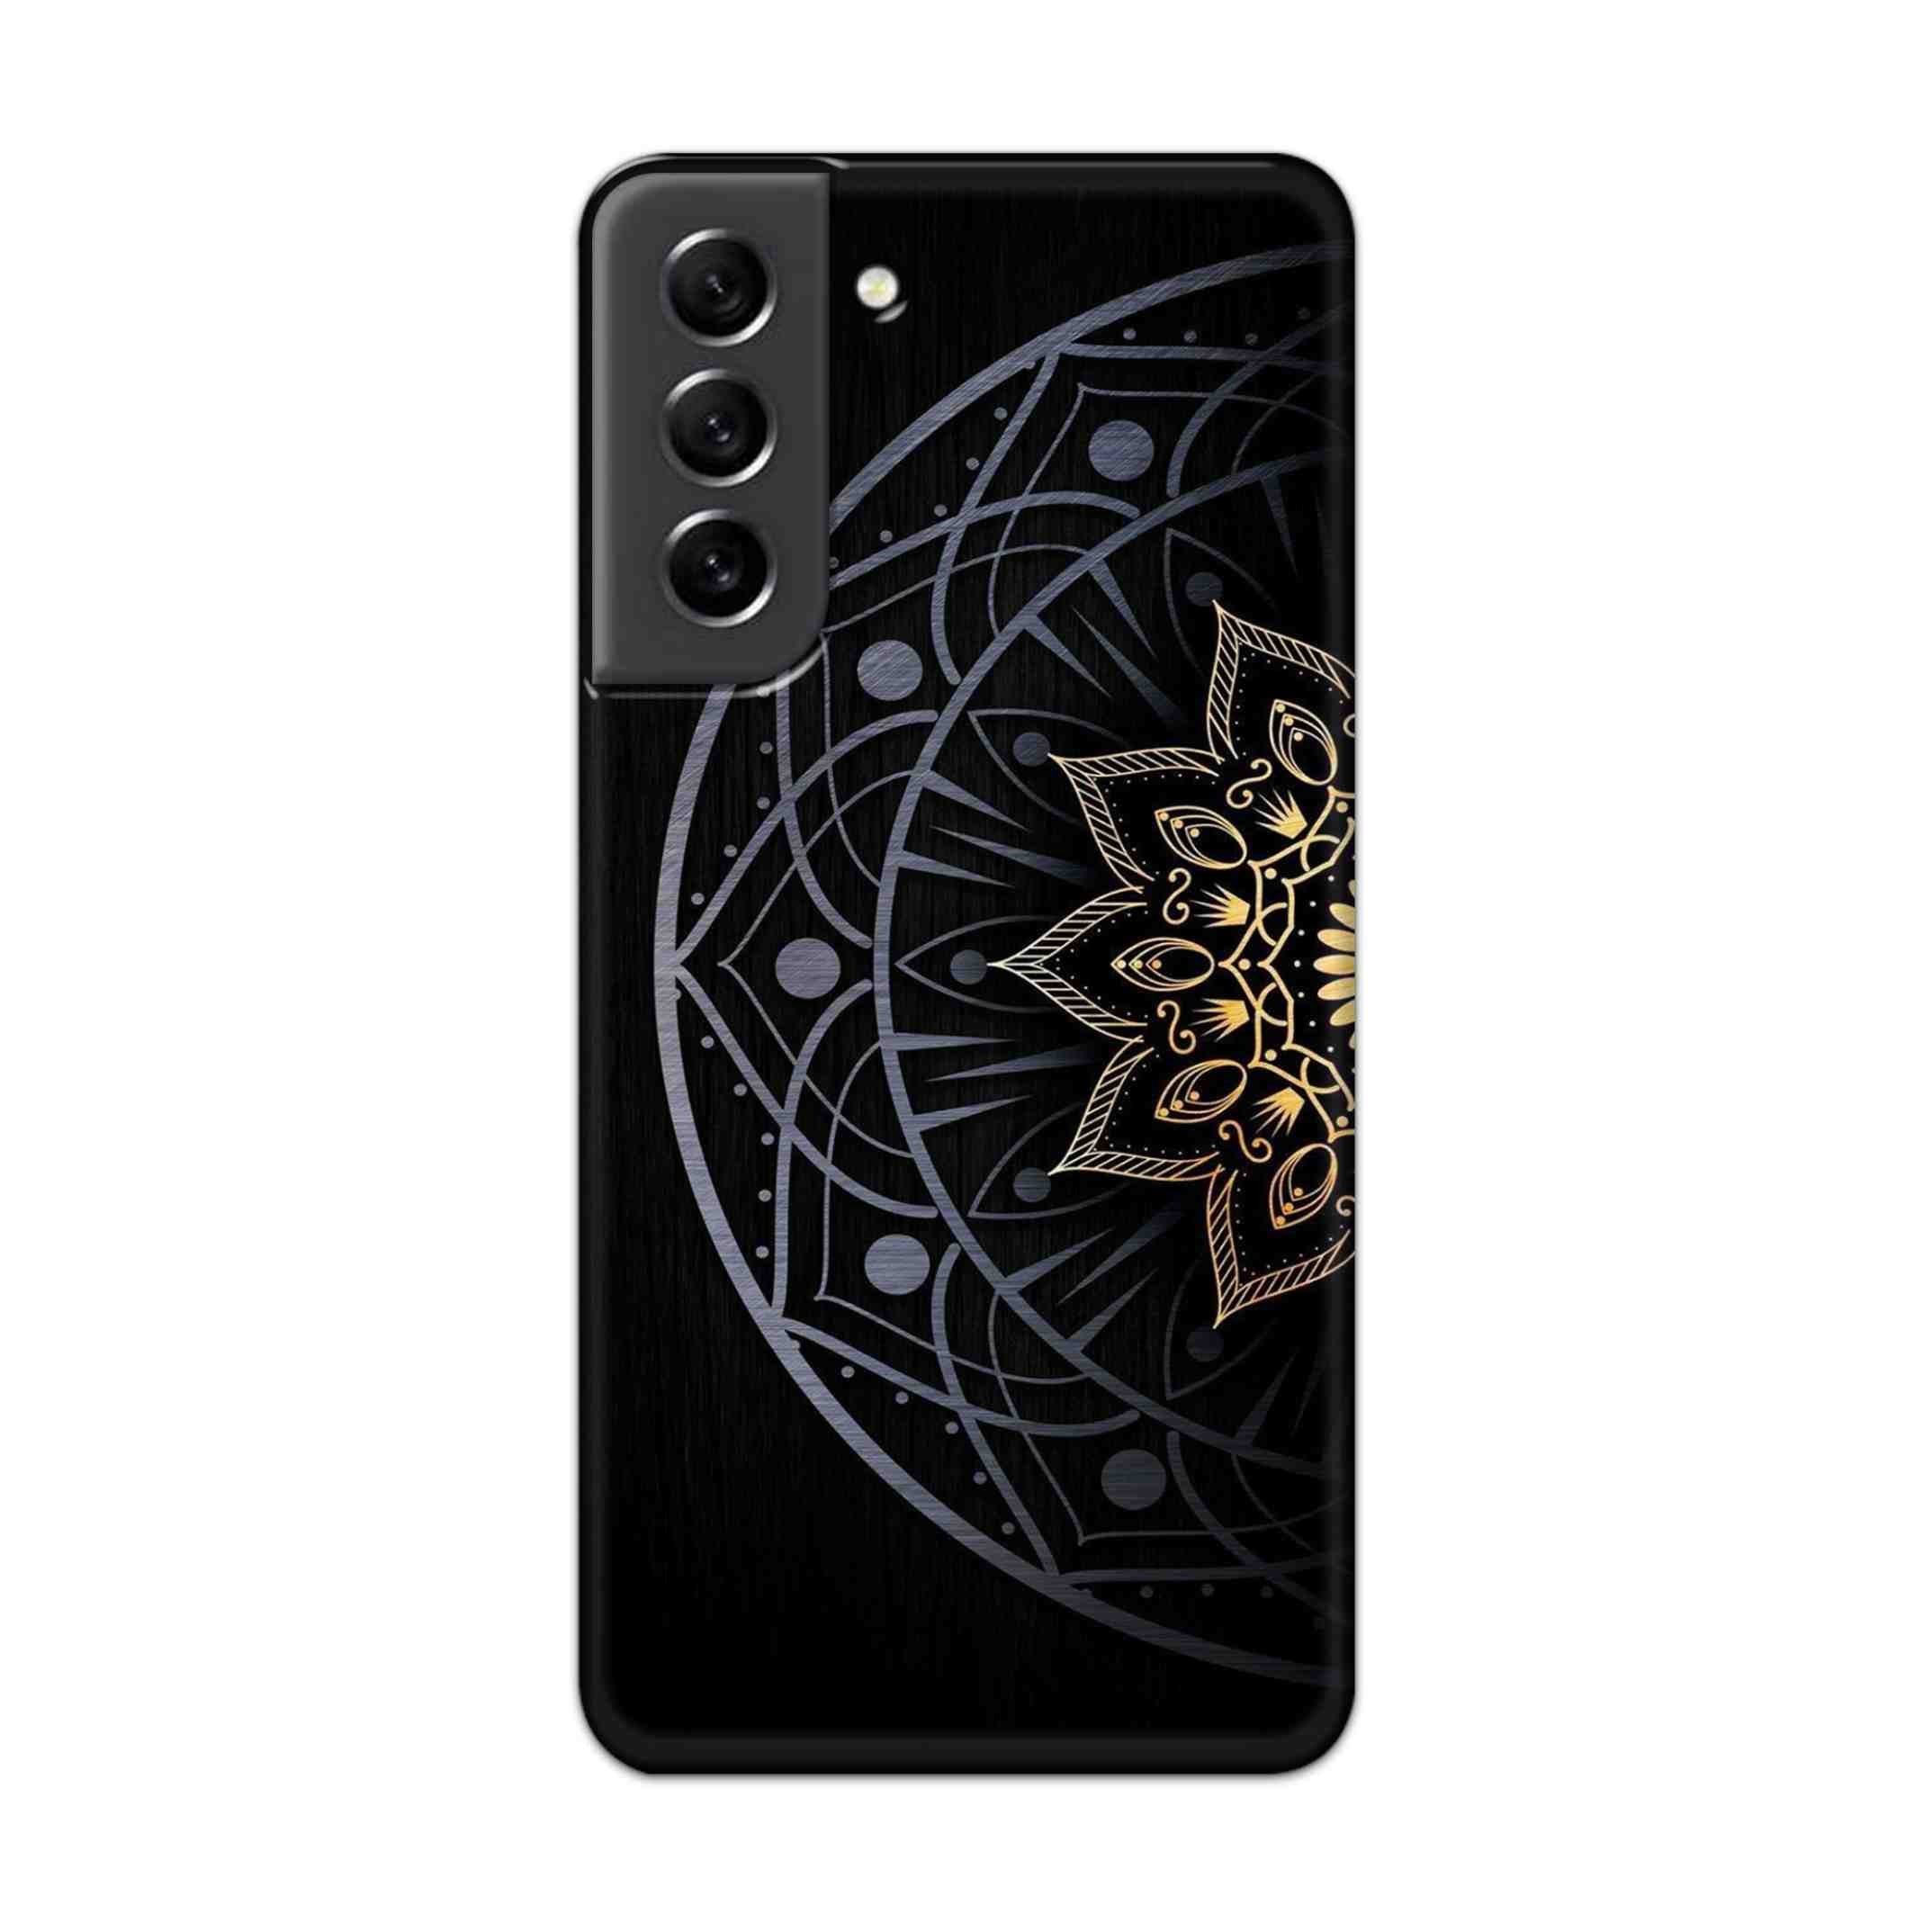 Buy Psychedelic Mandalas Hard Back Mobile Phone Case Cover For Samsung S21 FE Online